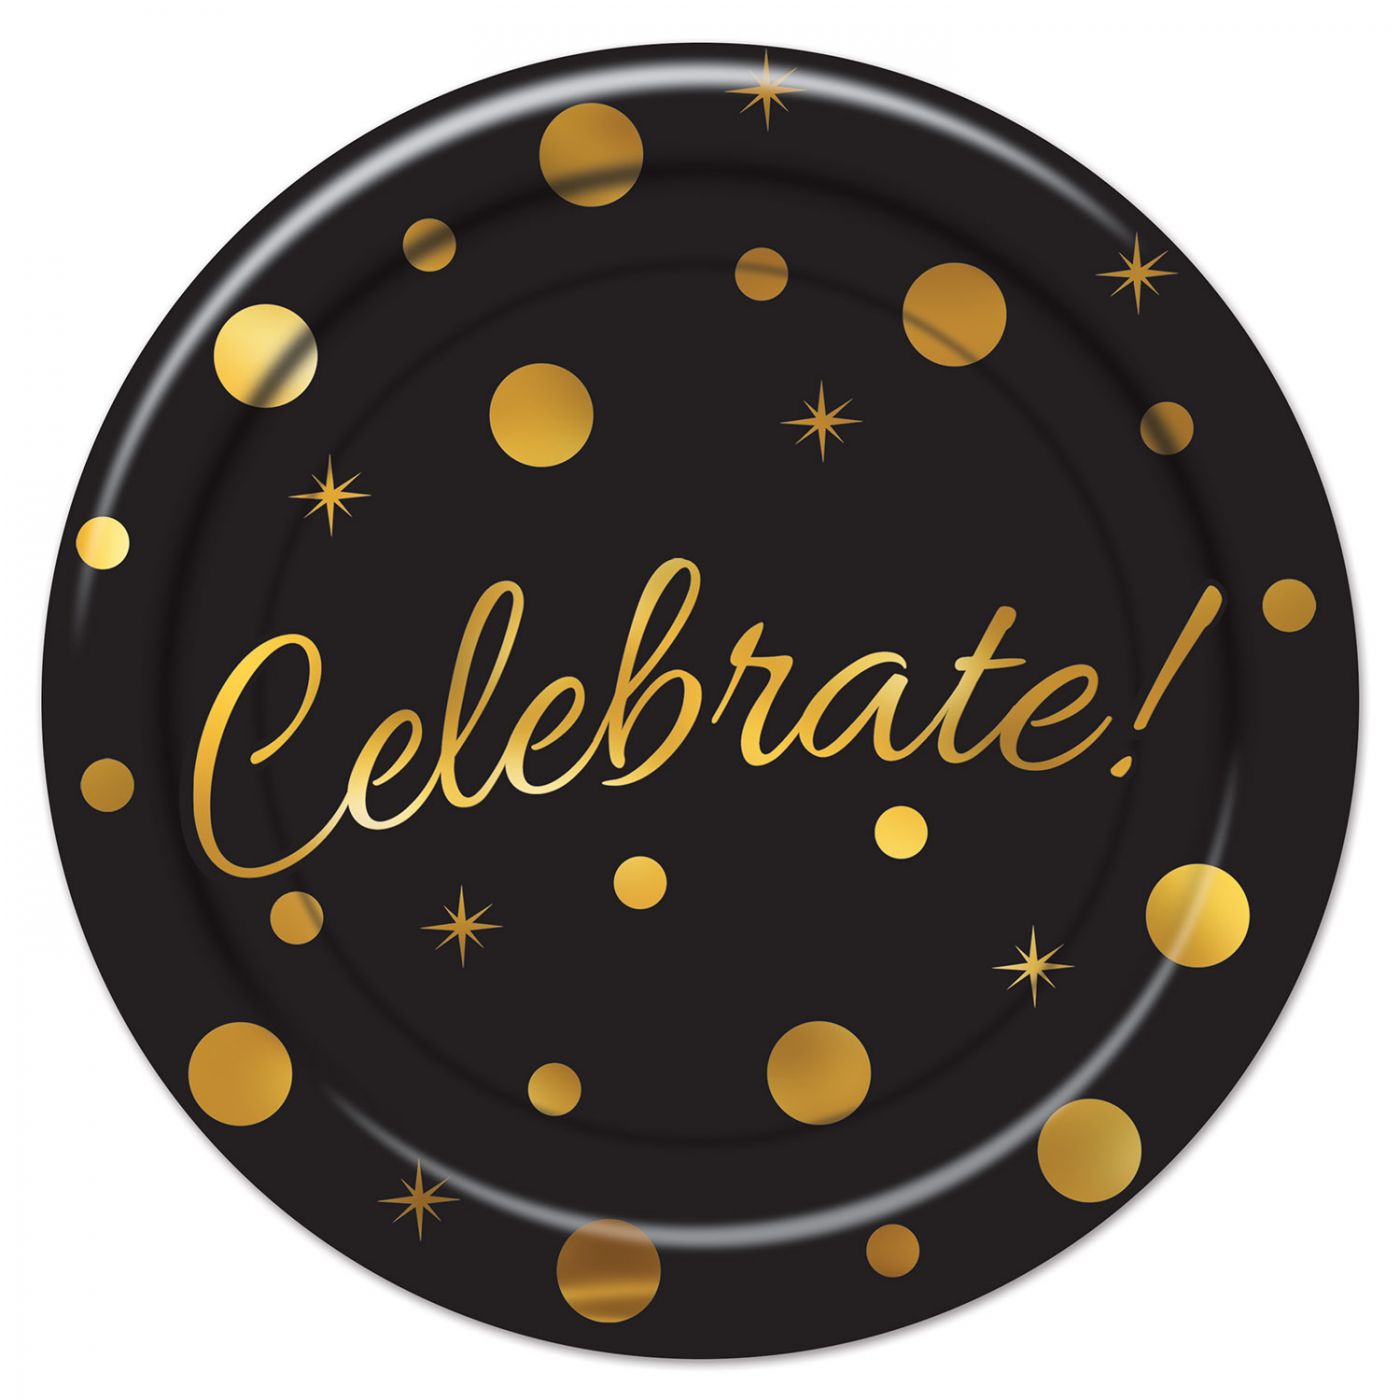 Celebrate! Plates image